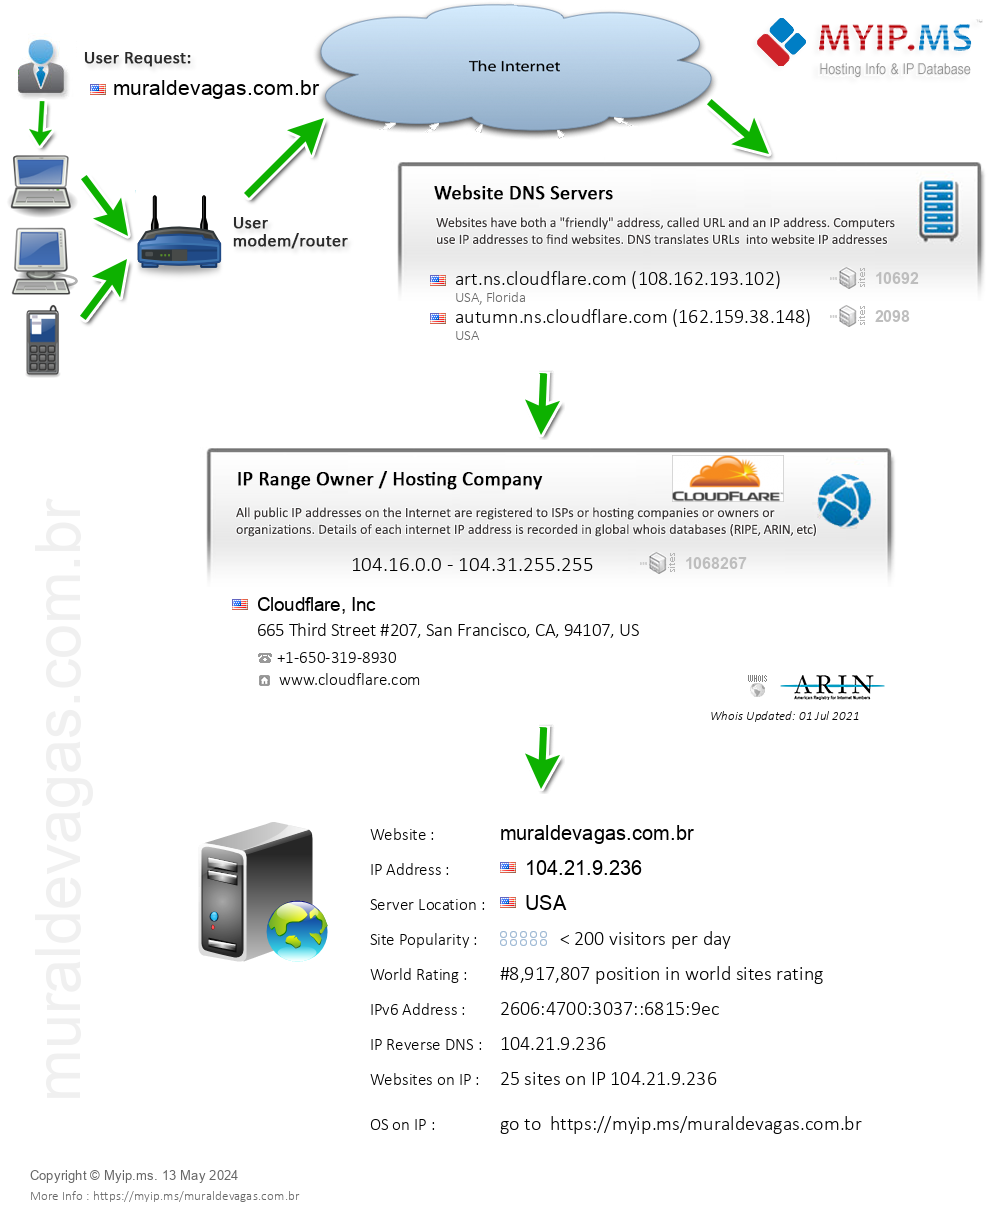 Muraldevagas.com.br - Website Hosting Visual IP Diagram